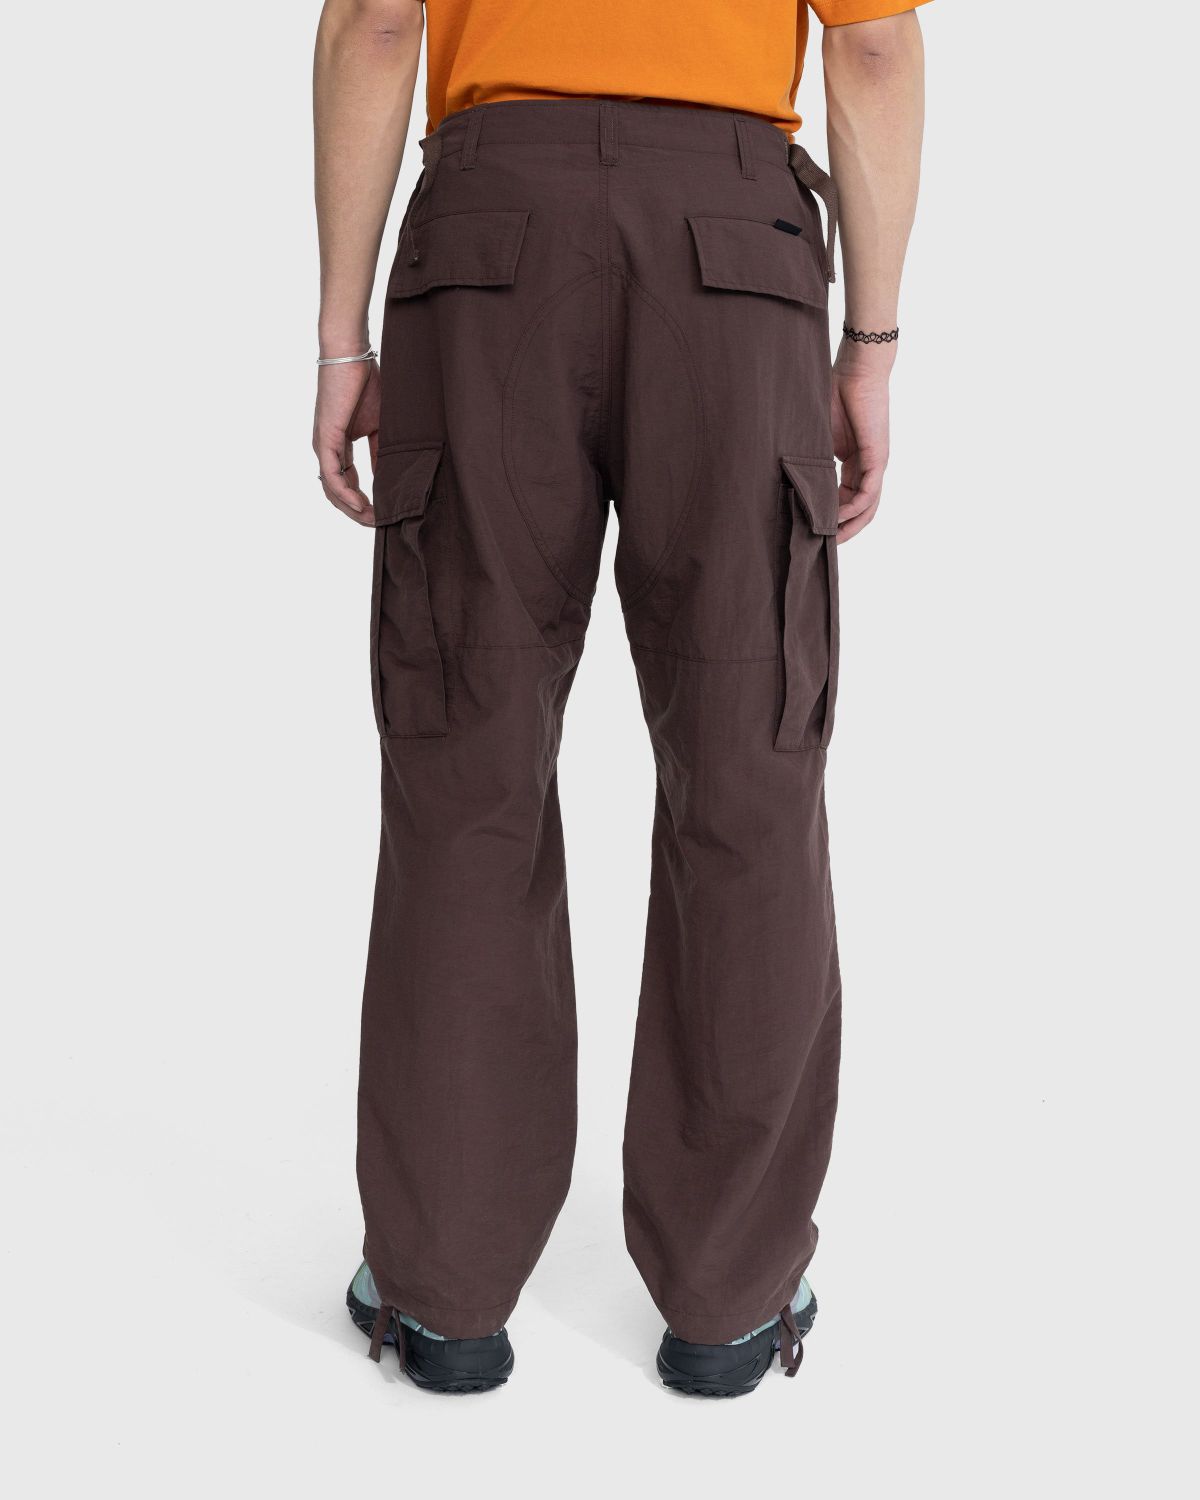 Highsnobiety – Nylon Cargo Pants Brown - Pants - Brown - Image 3